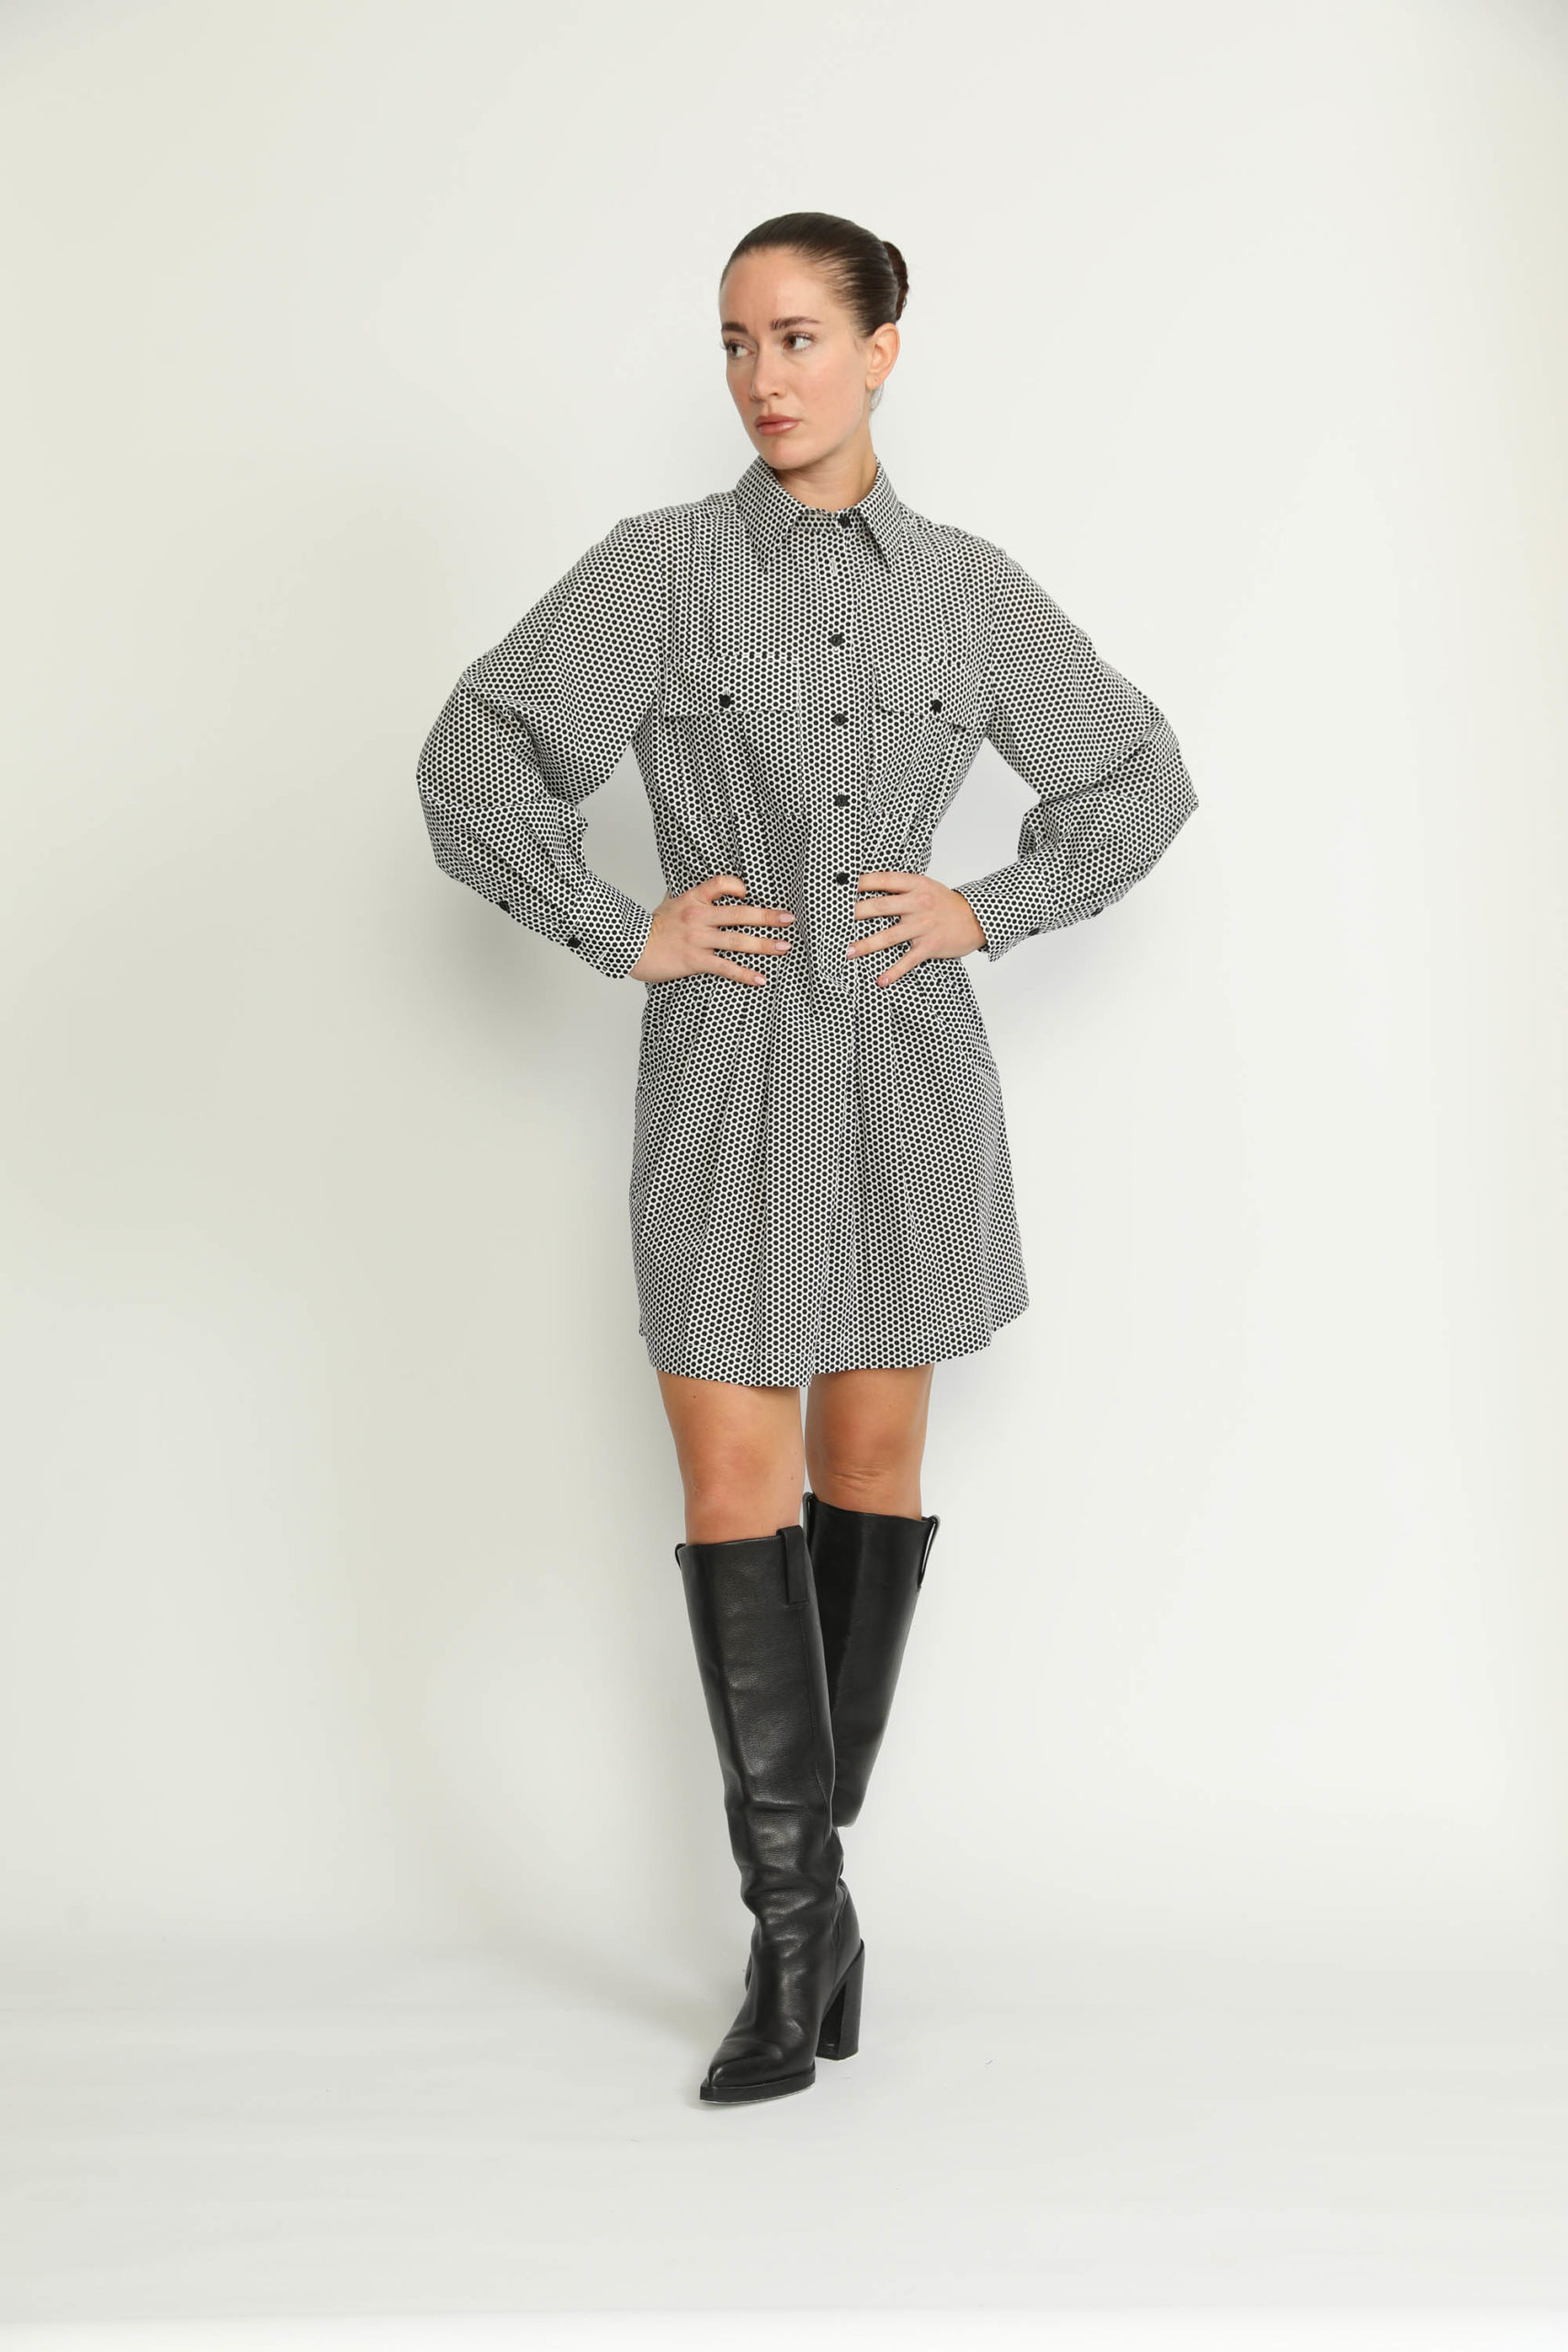 Pully Dress – Pully Short Shirt Dress in Black Polkadot0